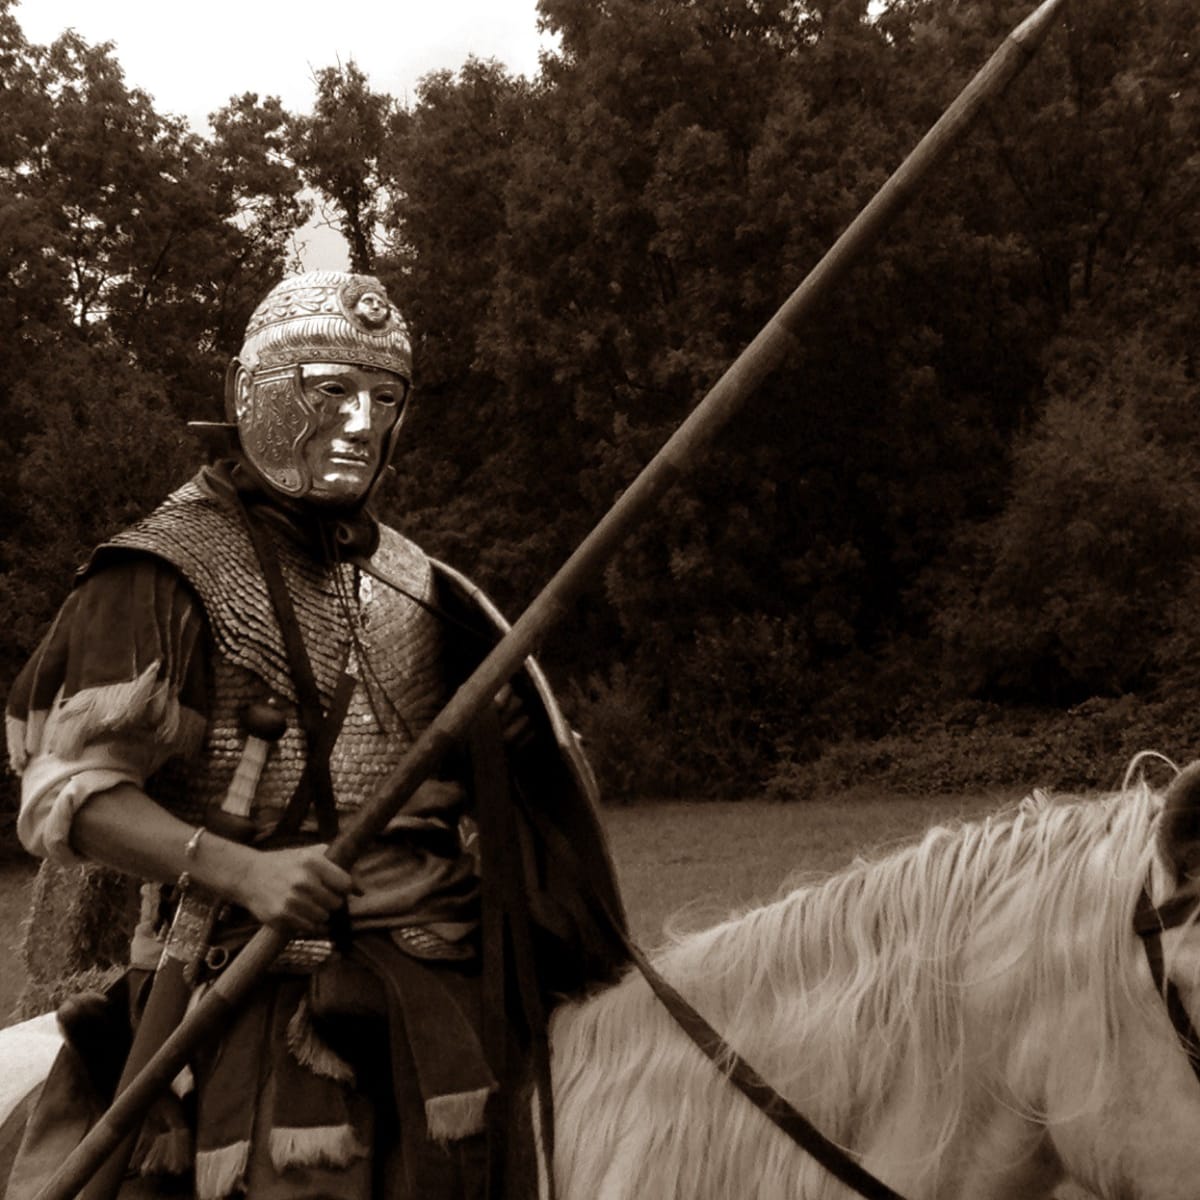 British Celtic Warrior vs Roman Soldier: Britannia AD 43–105